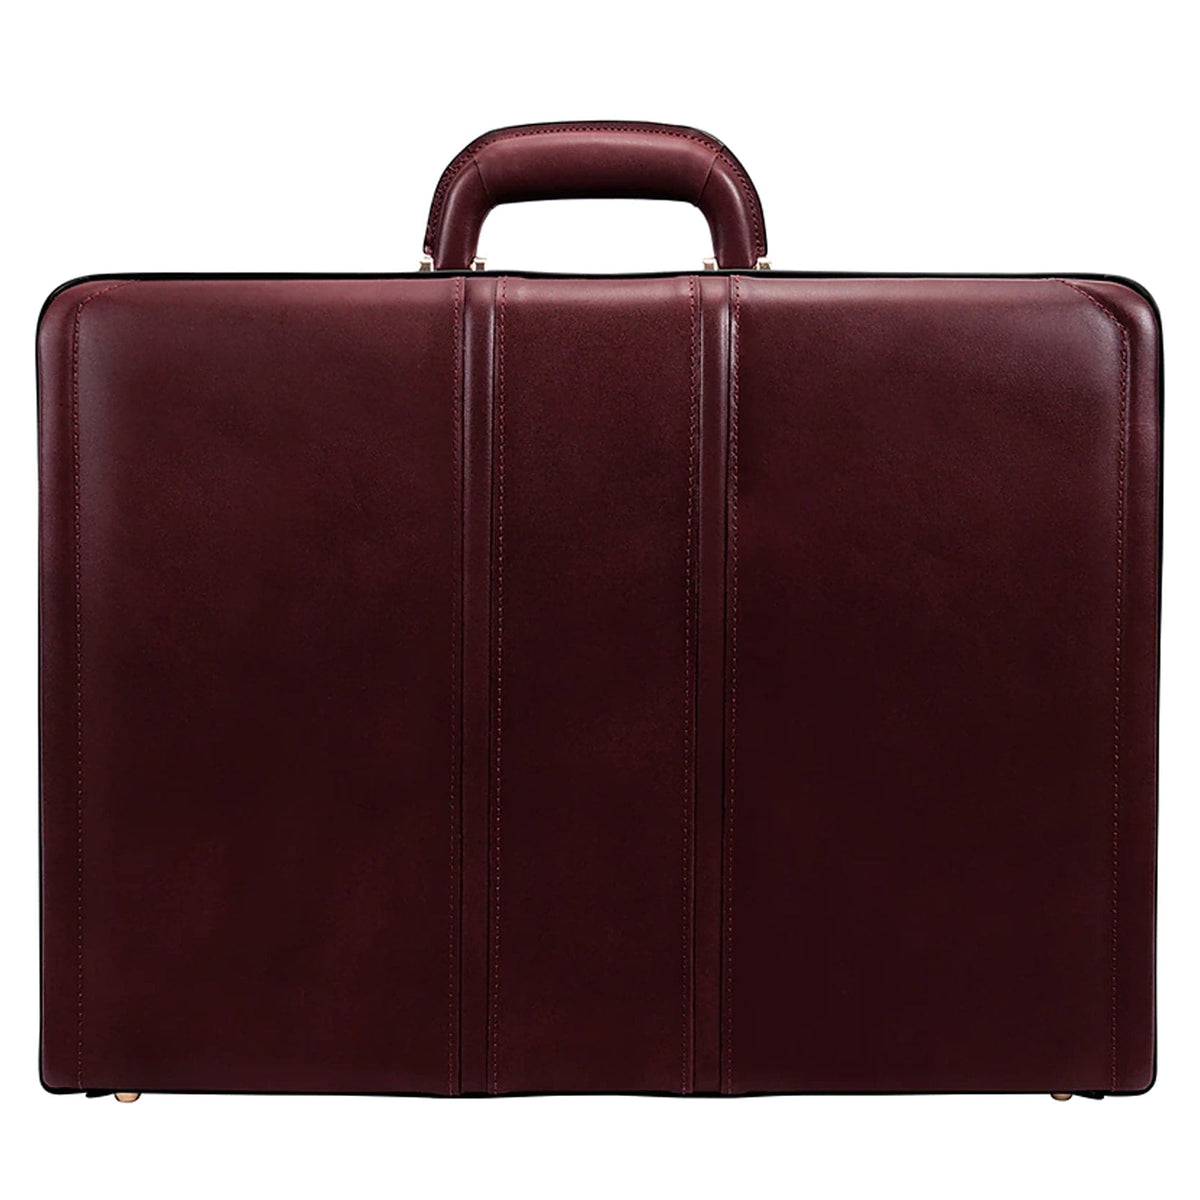 McKlein USA Coughlin 4.5" Leather Expandable Attache Briefcase